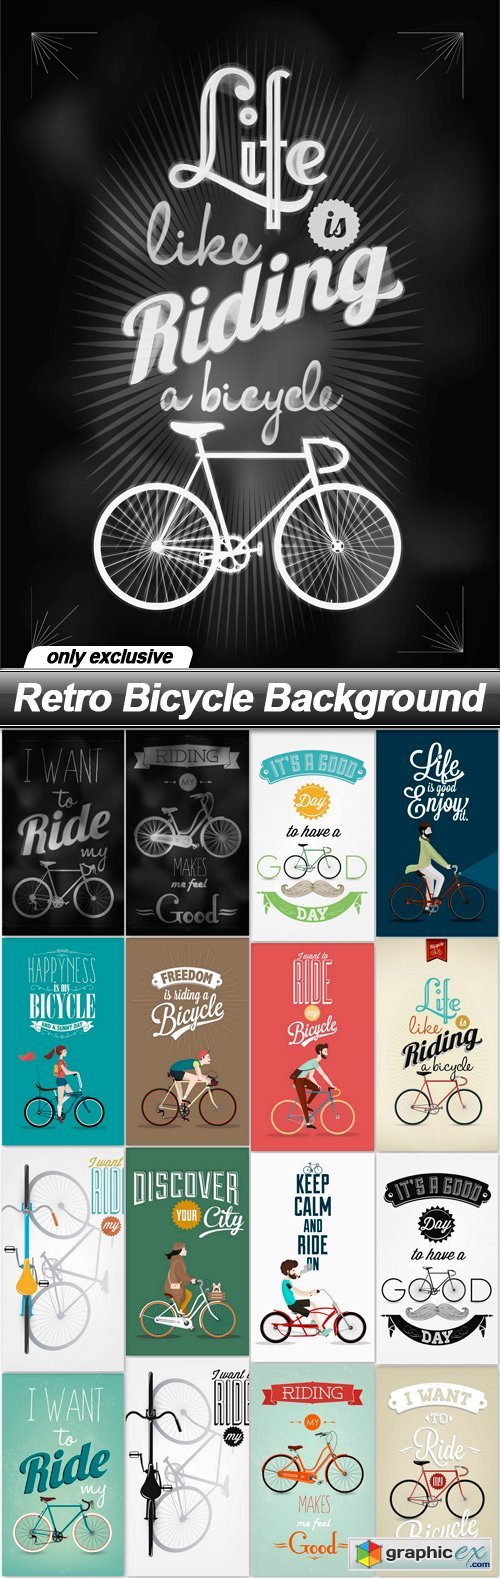 Retro Bicycle Background - 17 EPS